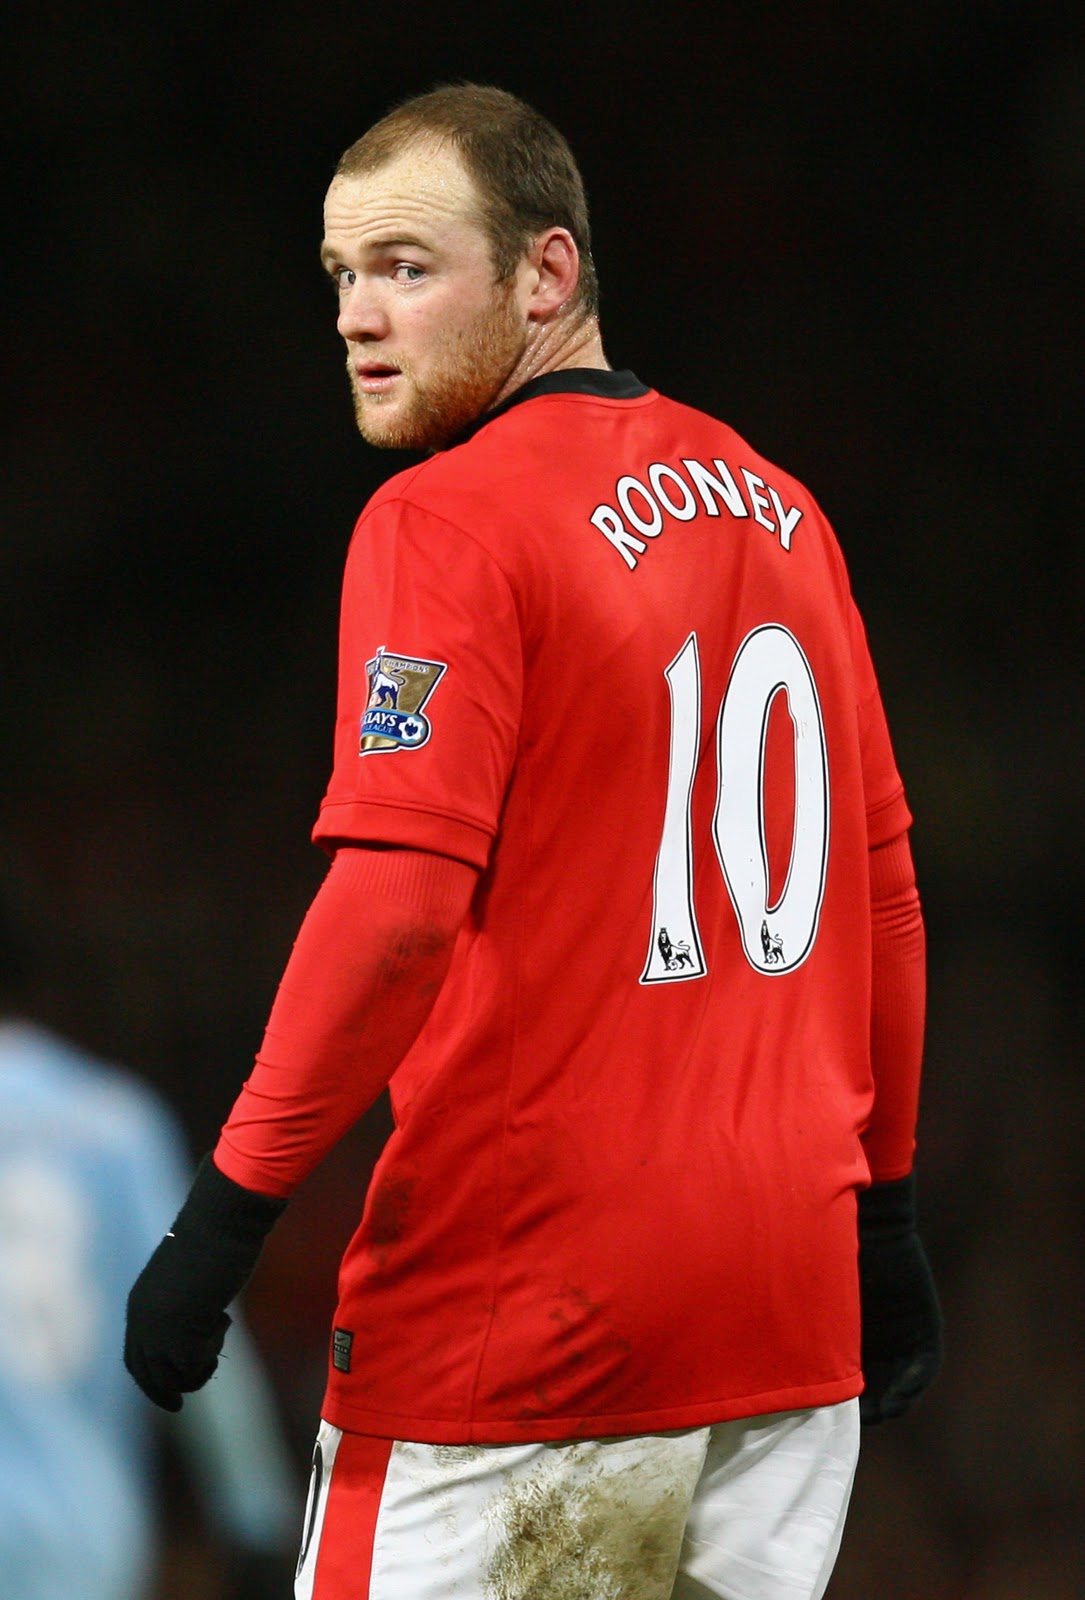 Wayne Rooney - Profiles and Photos